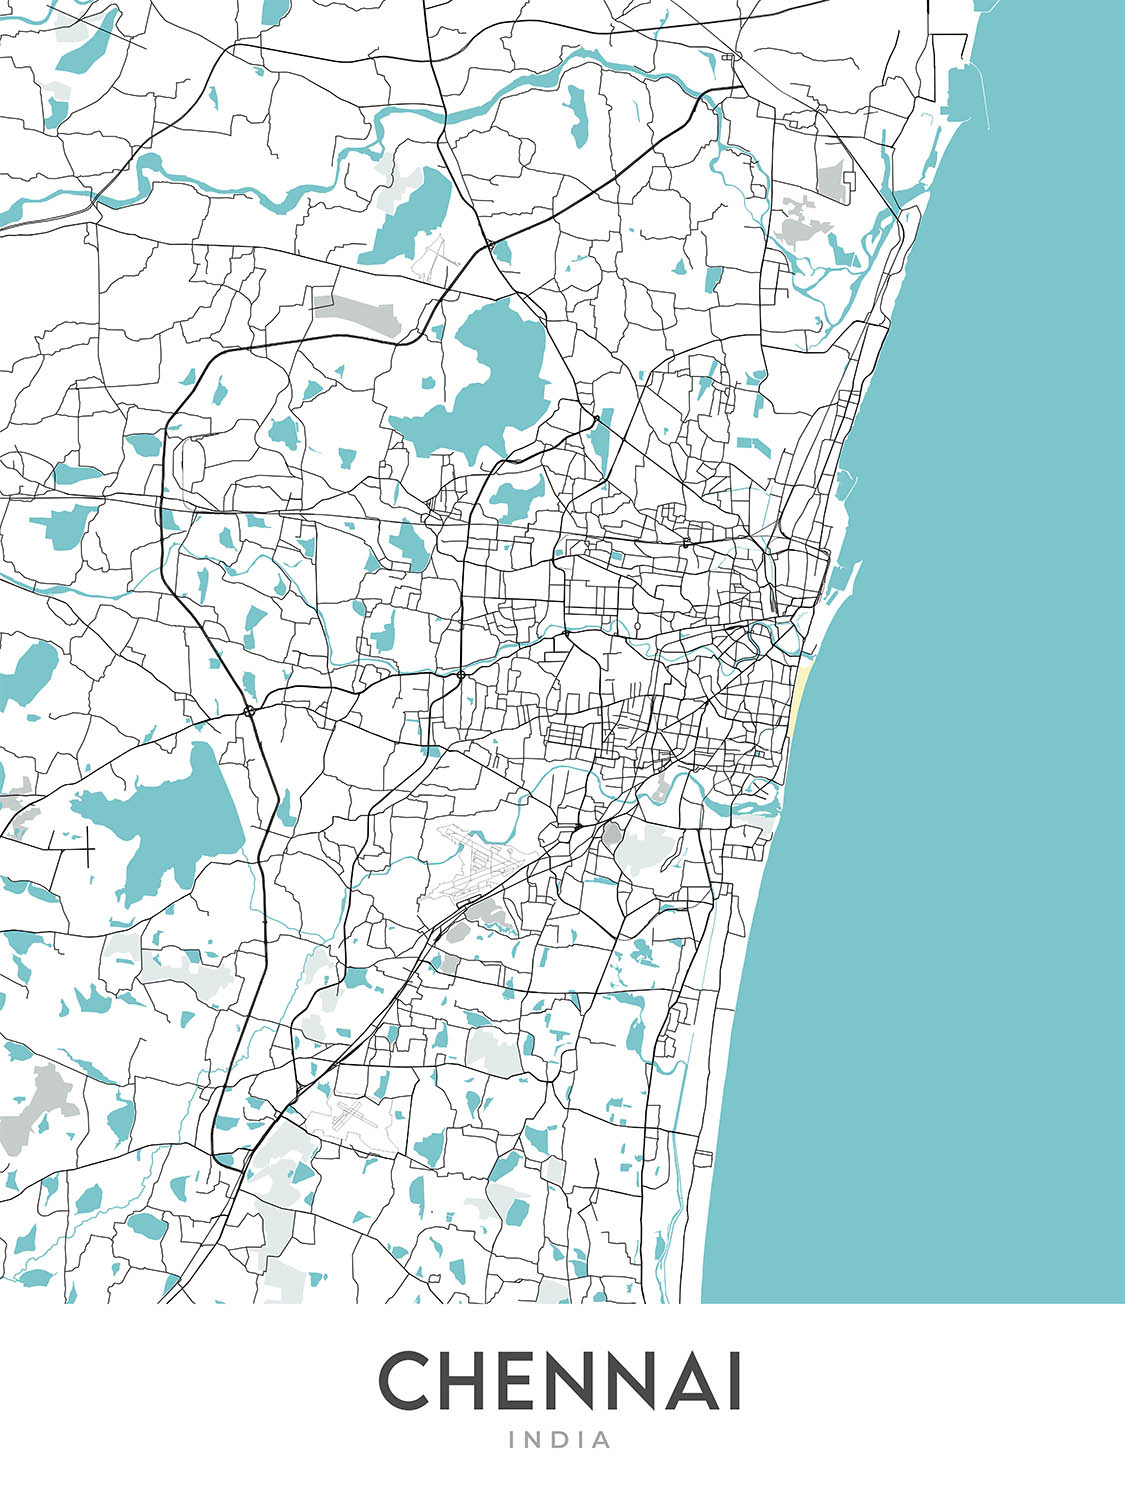 Plan de la ville moderne de Chennai, Inde : Marina Beach, Fort St. George, T. Nagar, Anna Salai, Mylapore